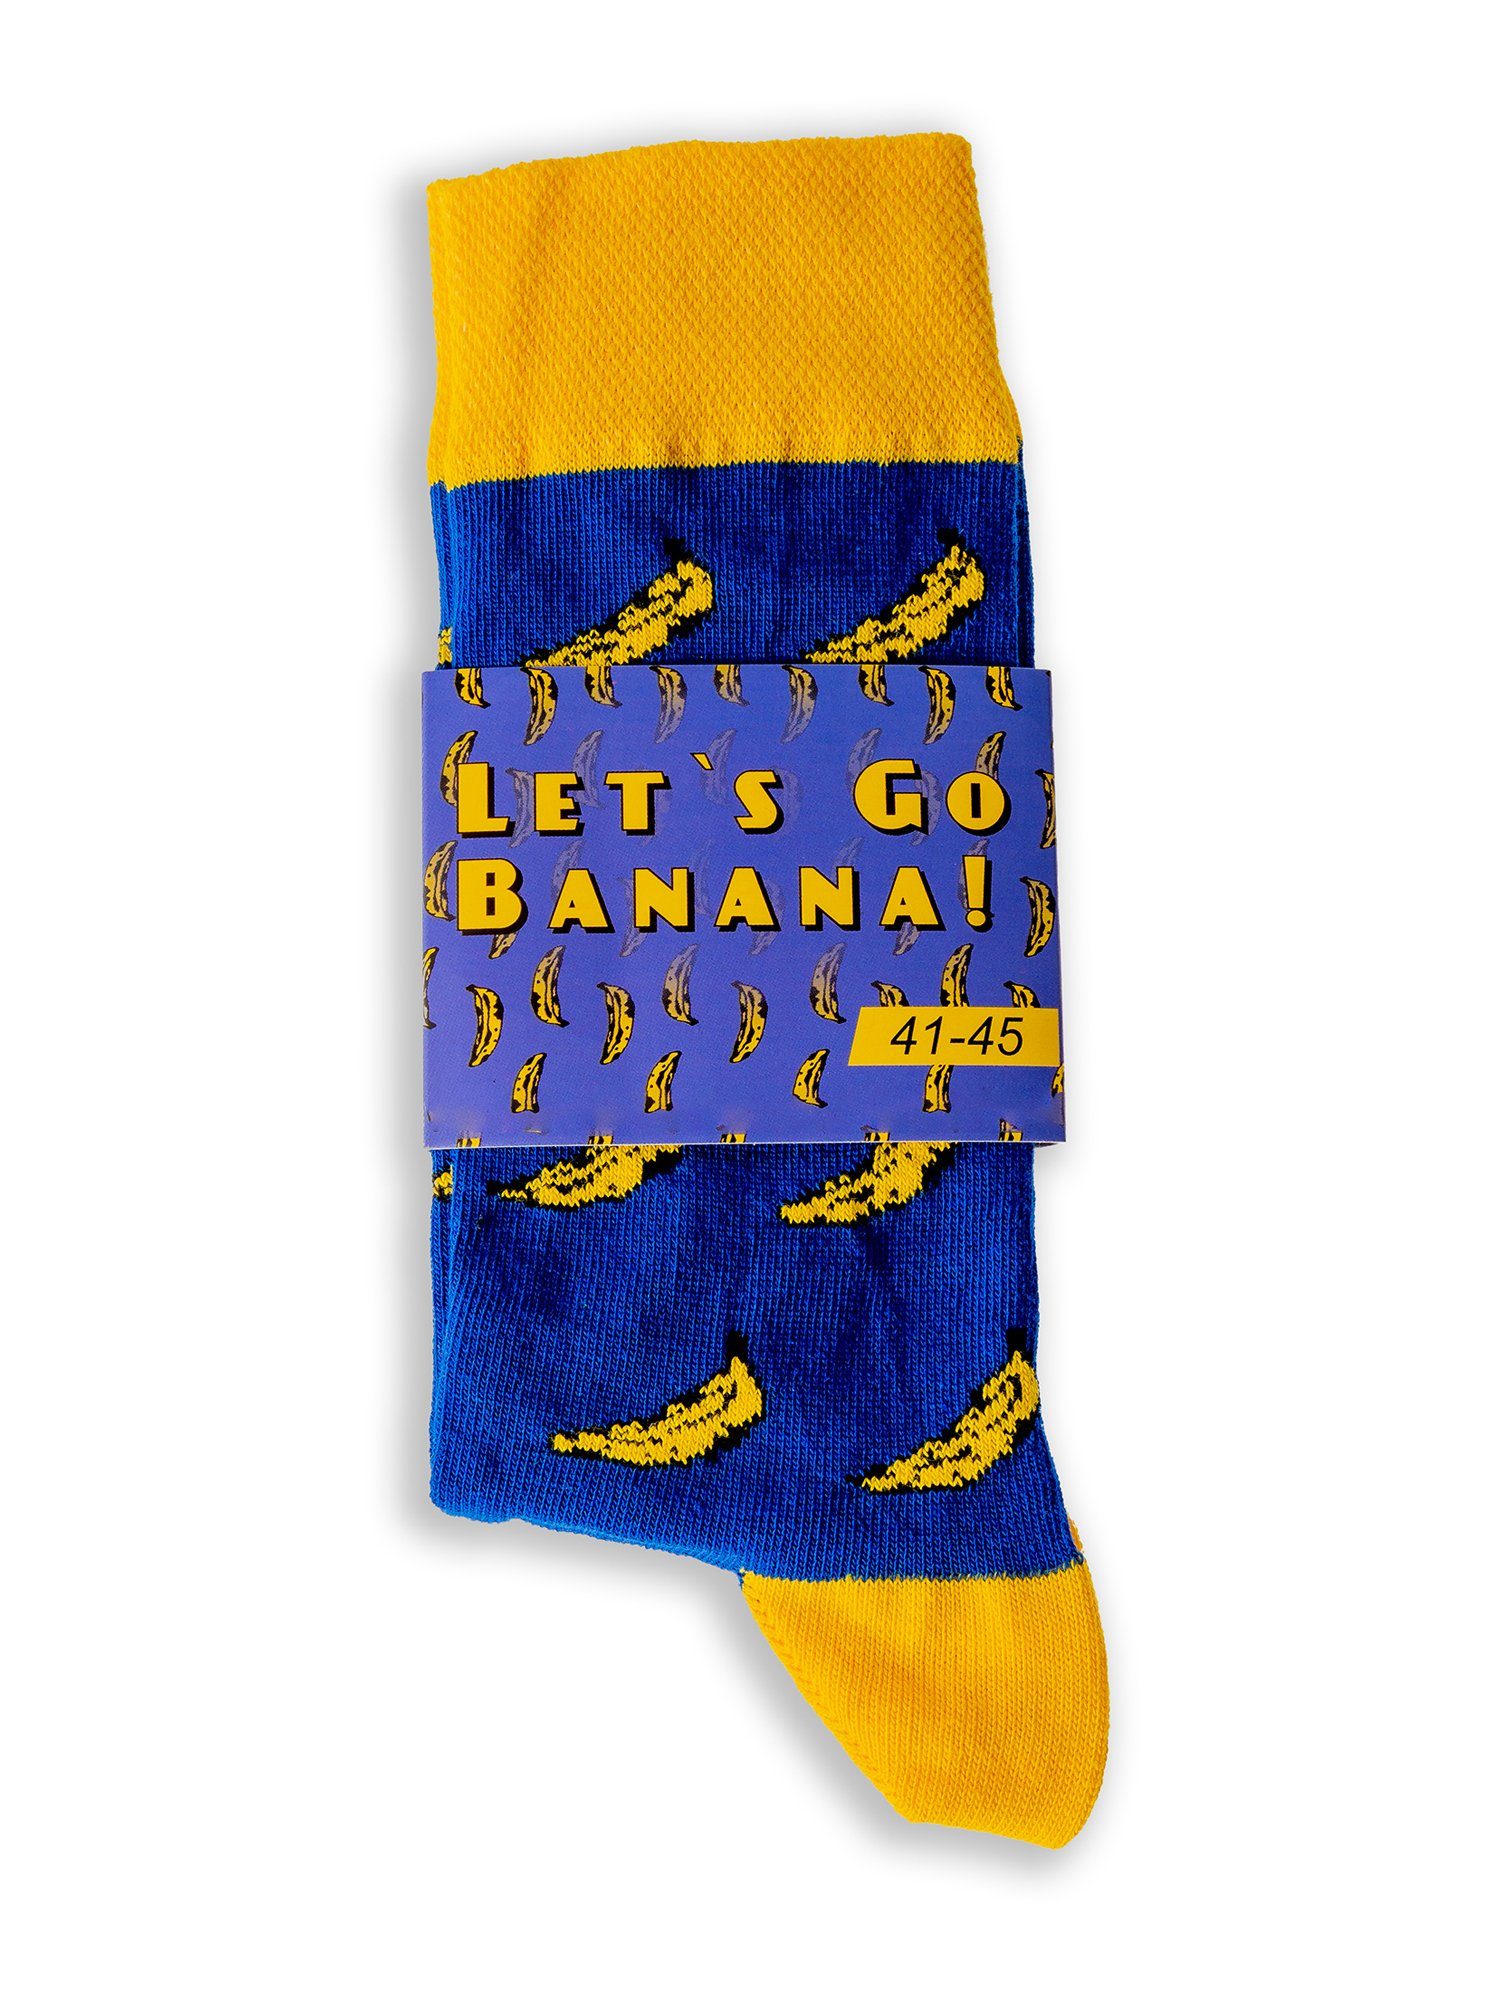 Chili Lifestyle Freizeitsocken Banana Socks Banderole Leisure